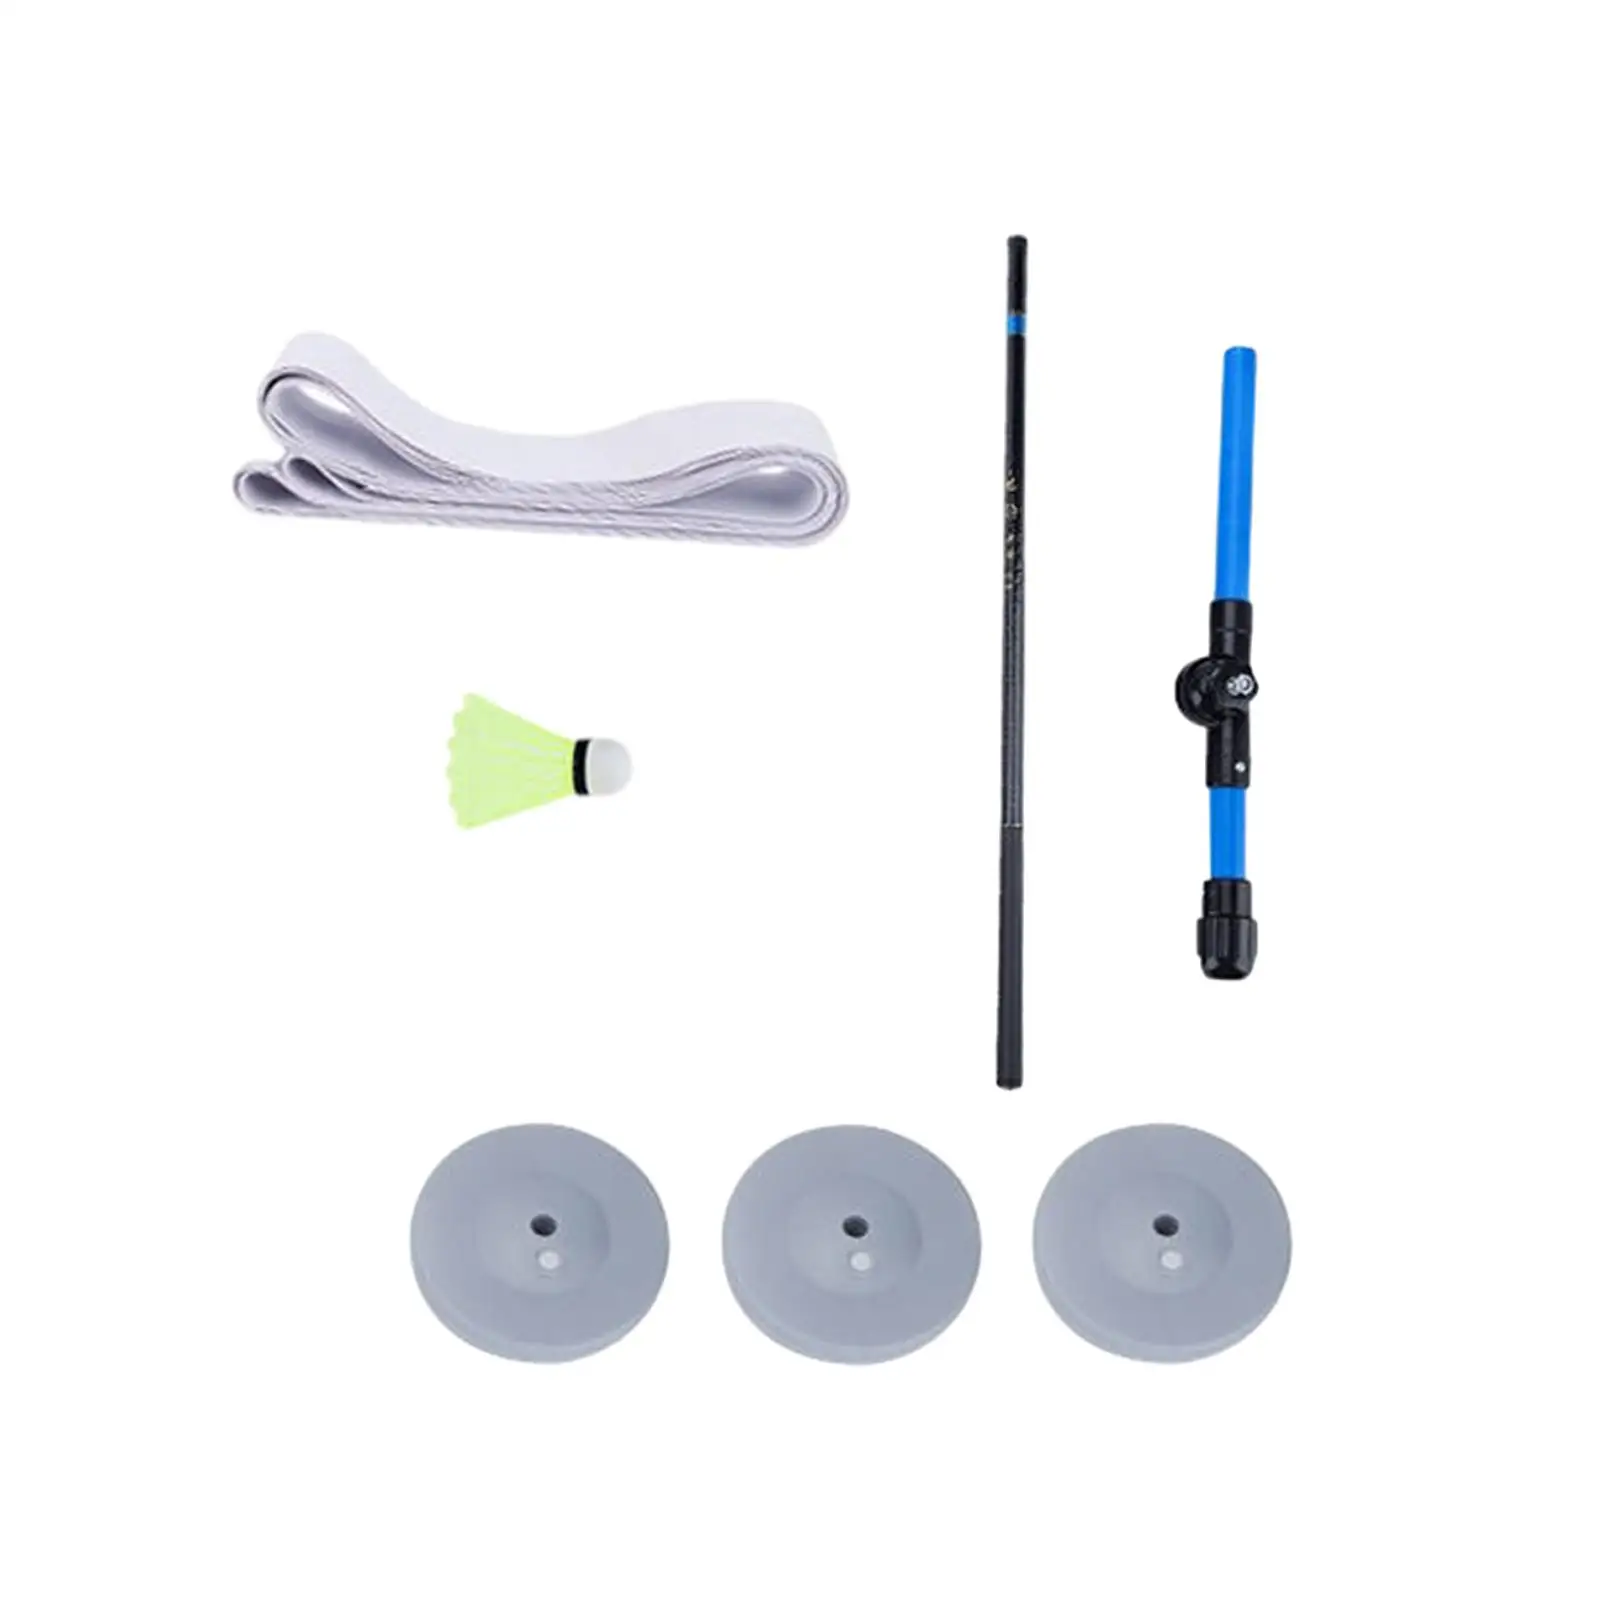 Badminton Trainer Equipment 3 Water Filled Base Adjustable Elastic Rod Badminton Single Training Device for Indoor Backyard